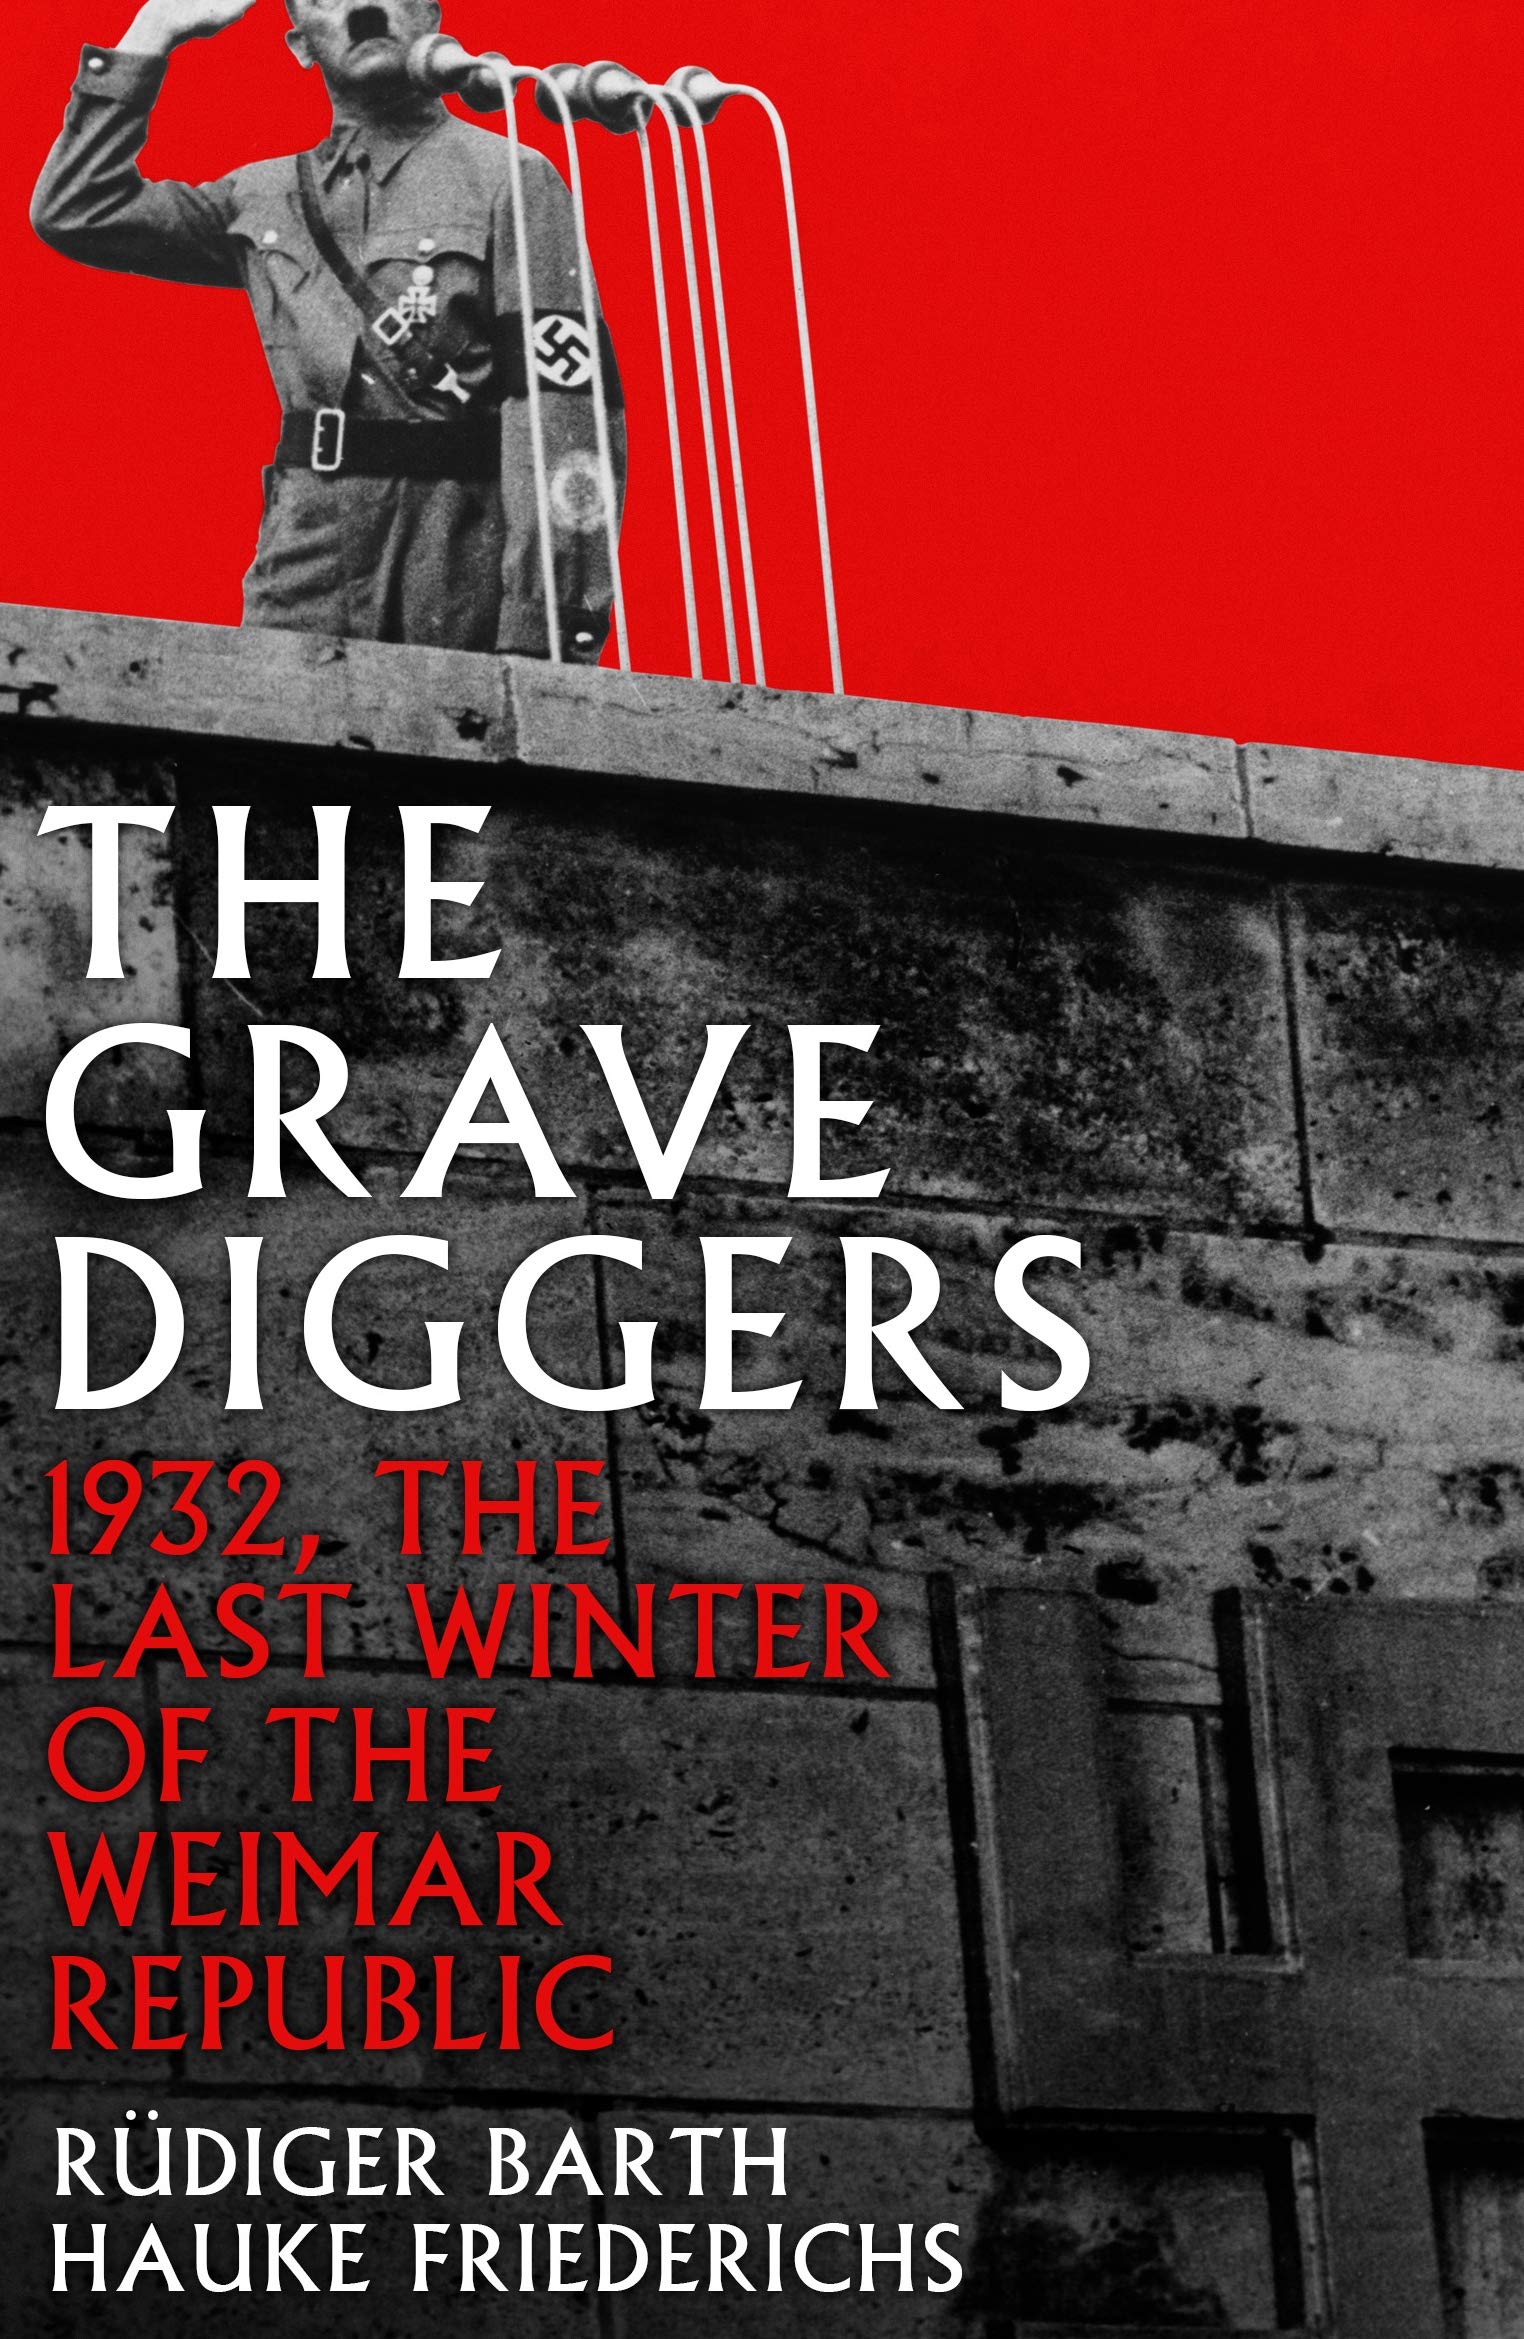 The Gravediggers | Rudiger Barth, Hauke Friederichs